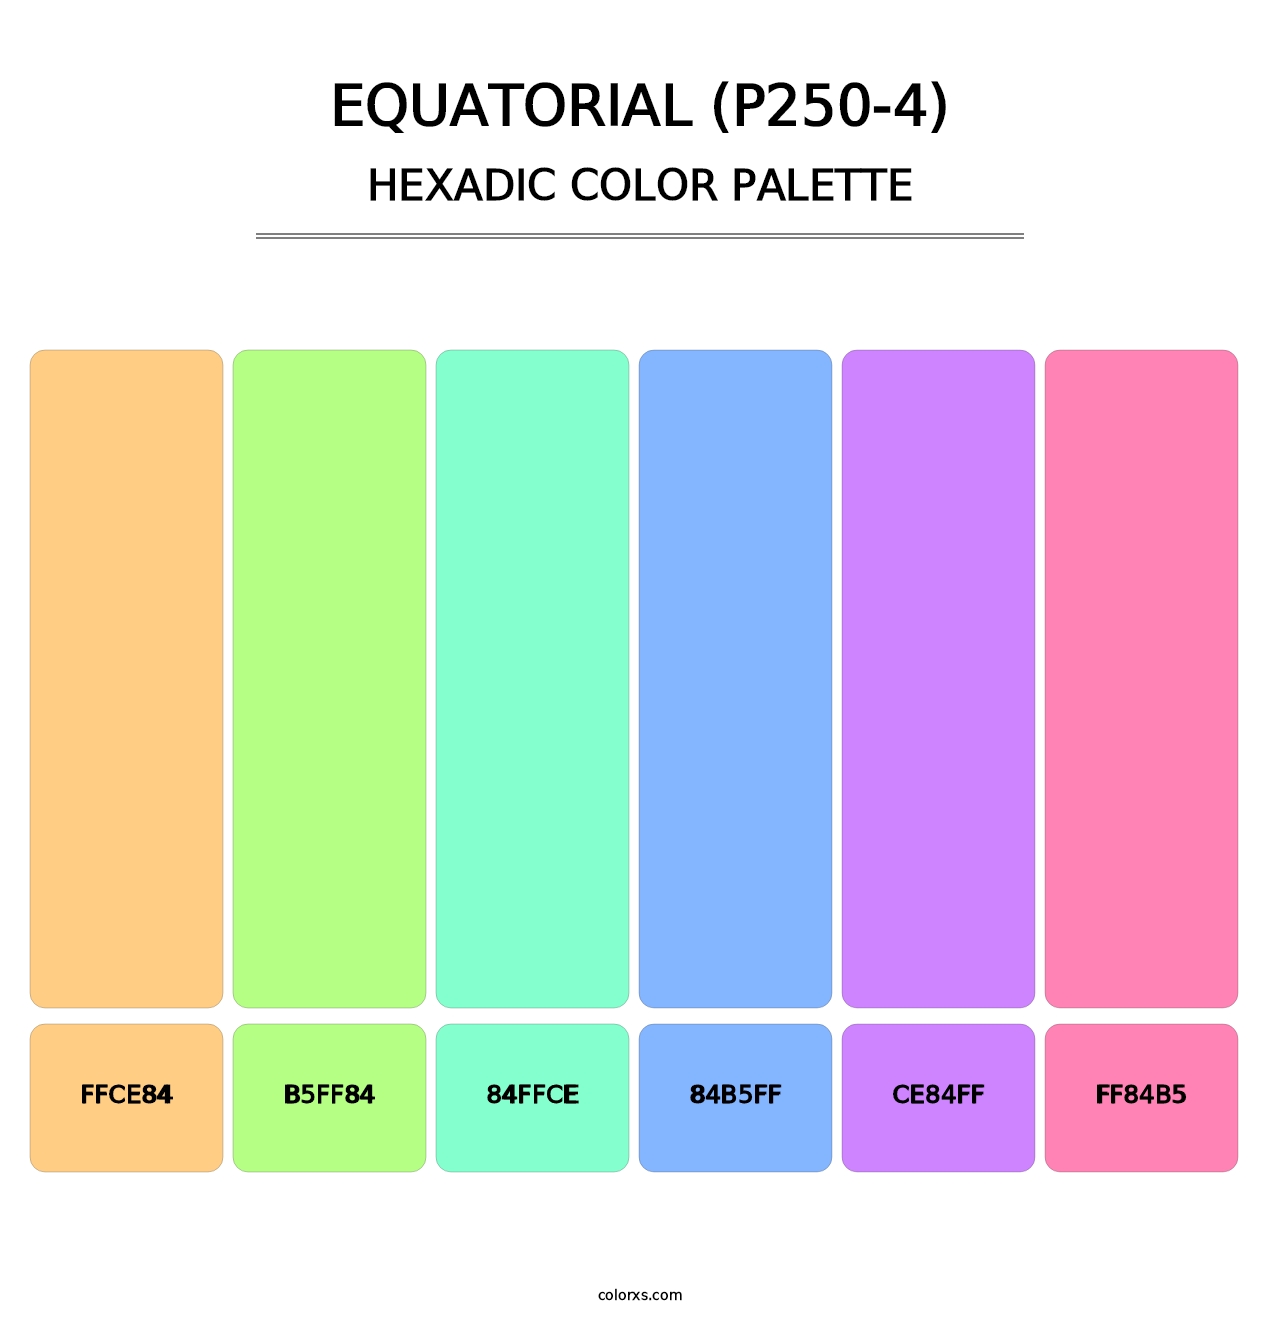 Equatorial (P250-4) - Hexadic Color Palette